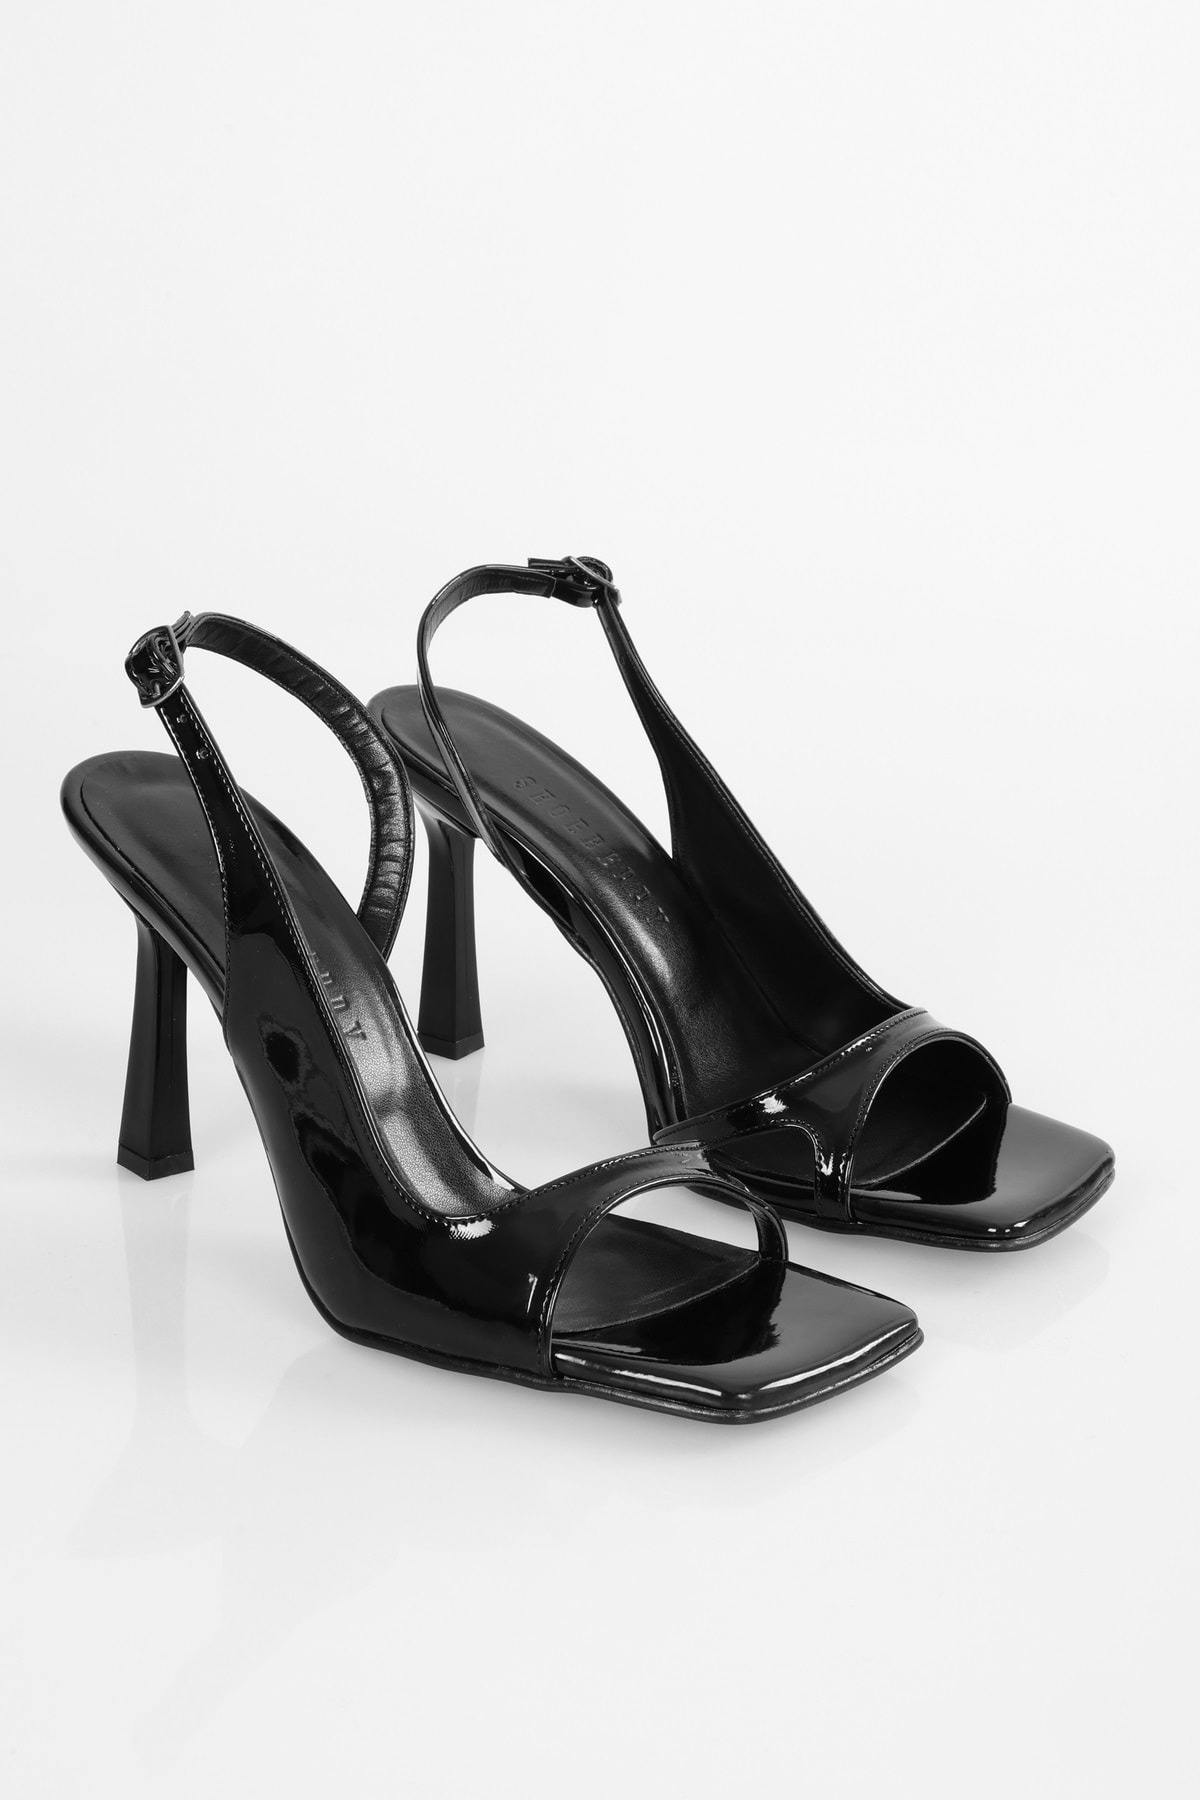 Shoeberry Women's Tobian Black Patent Leather Heeled Shoes